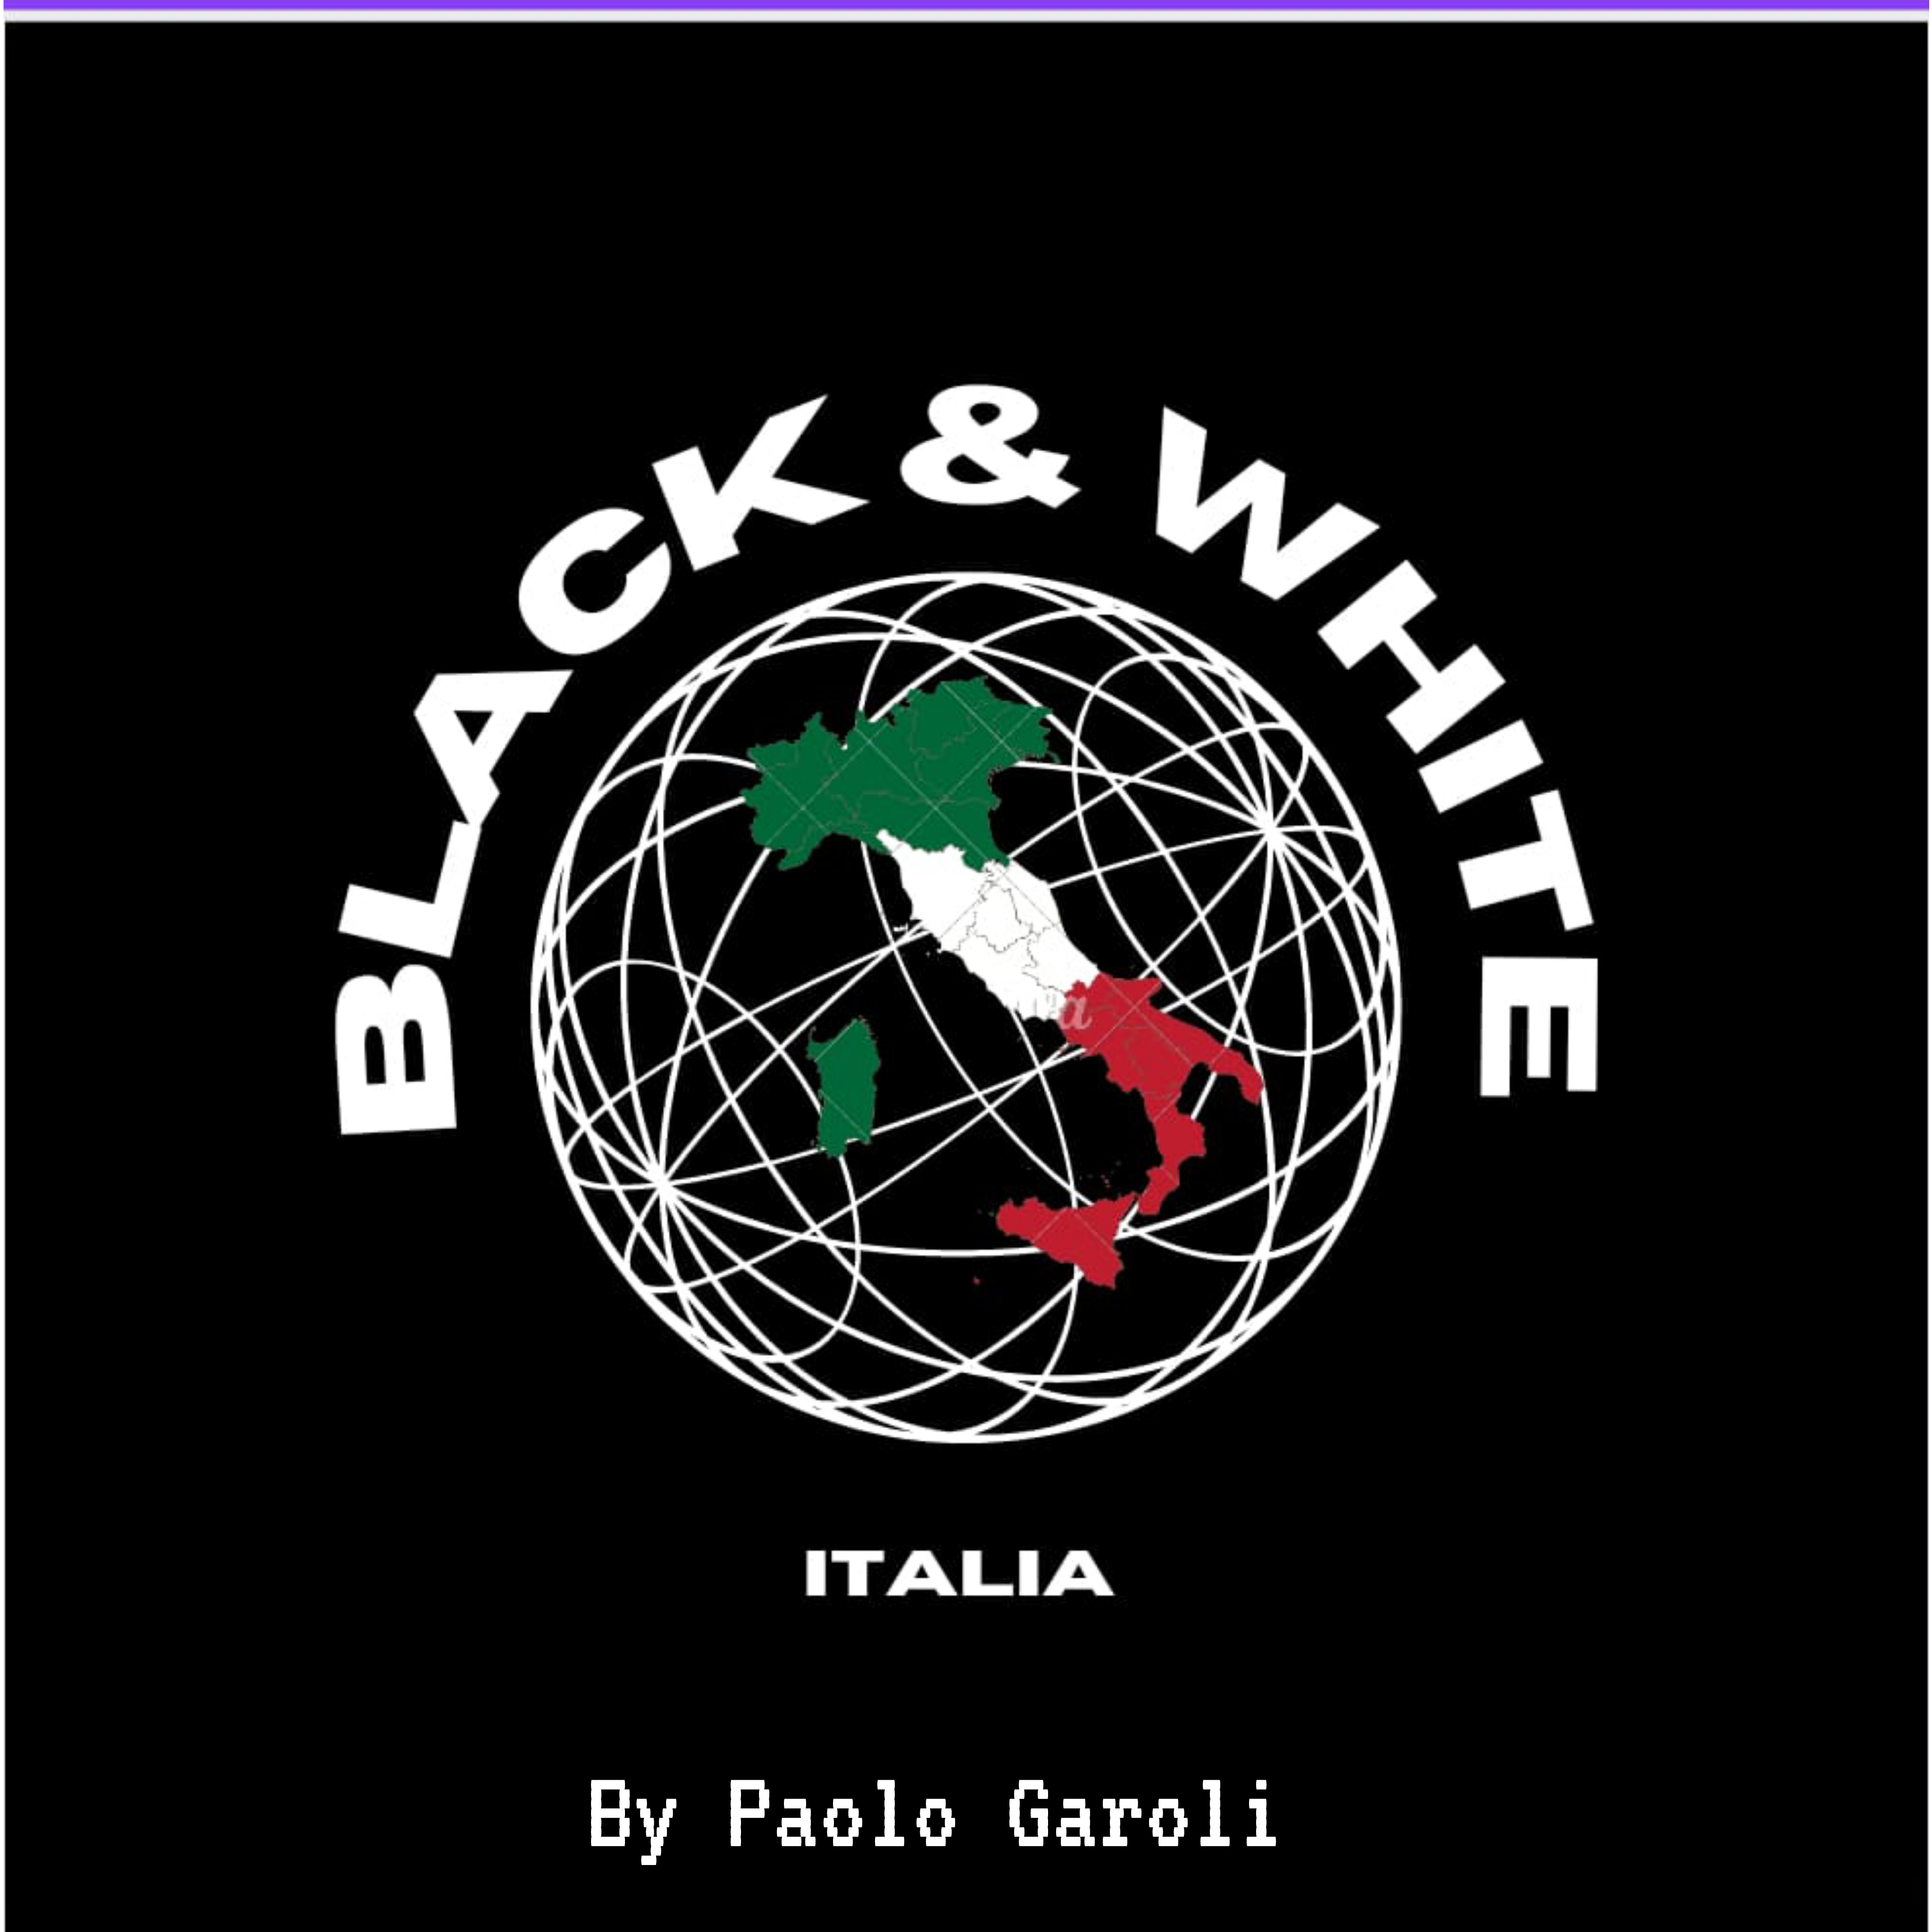 Black & White Italia by Paolo Garoli